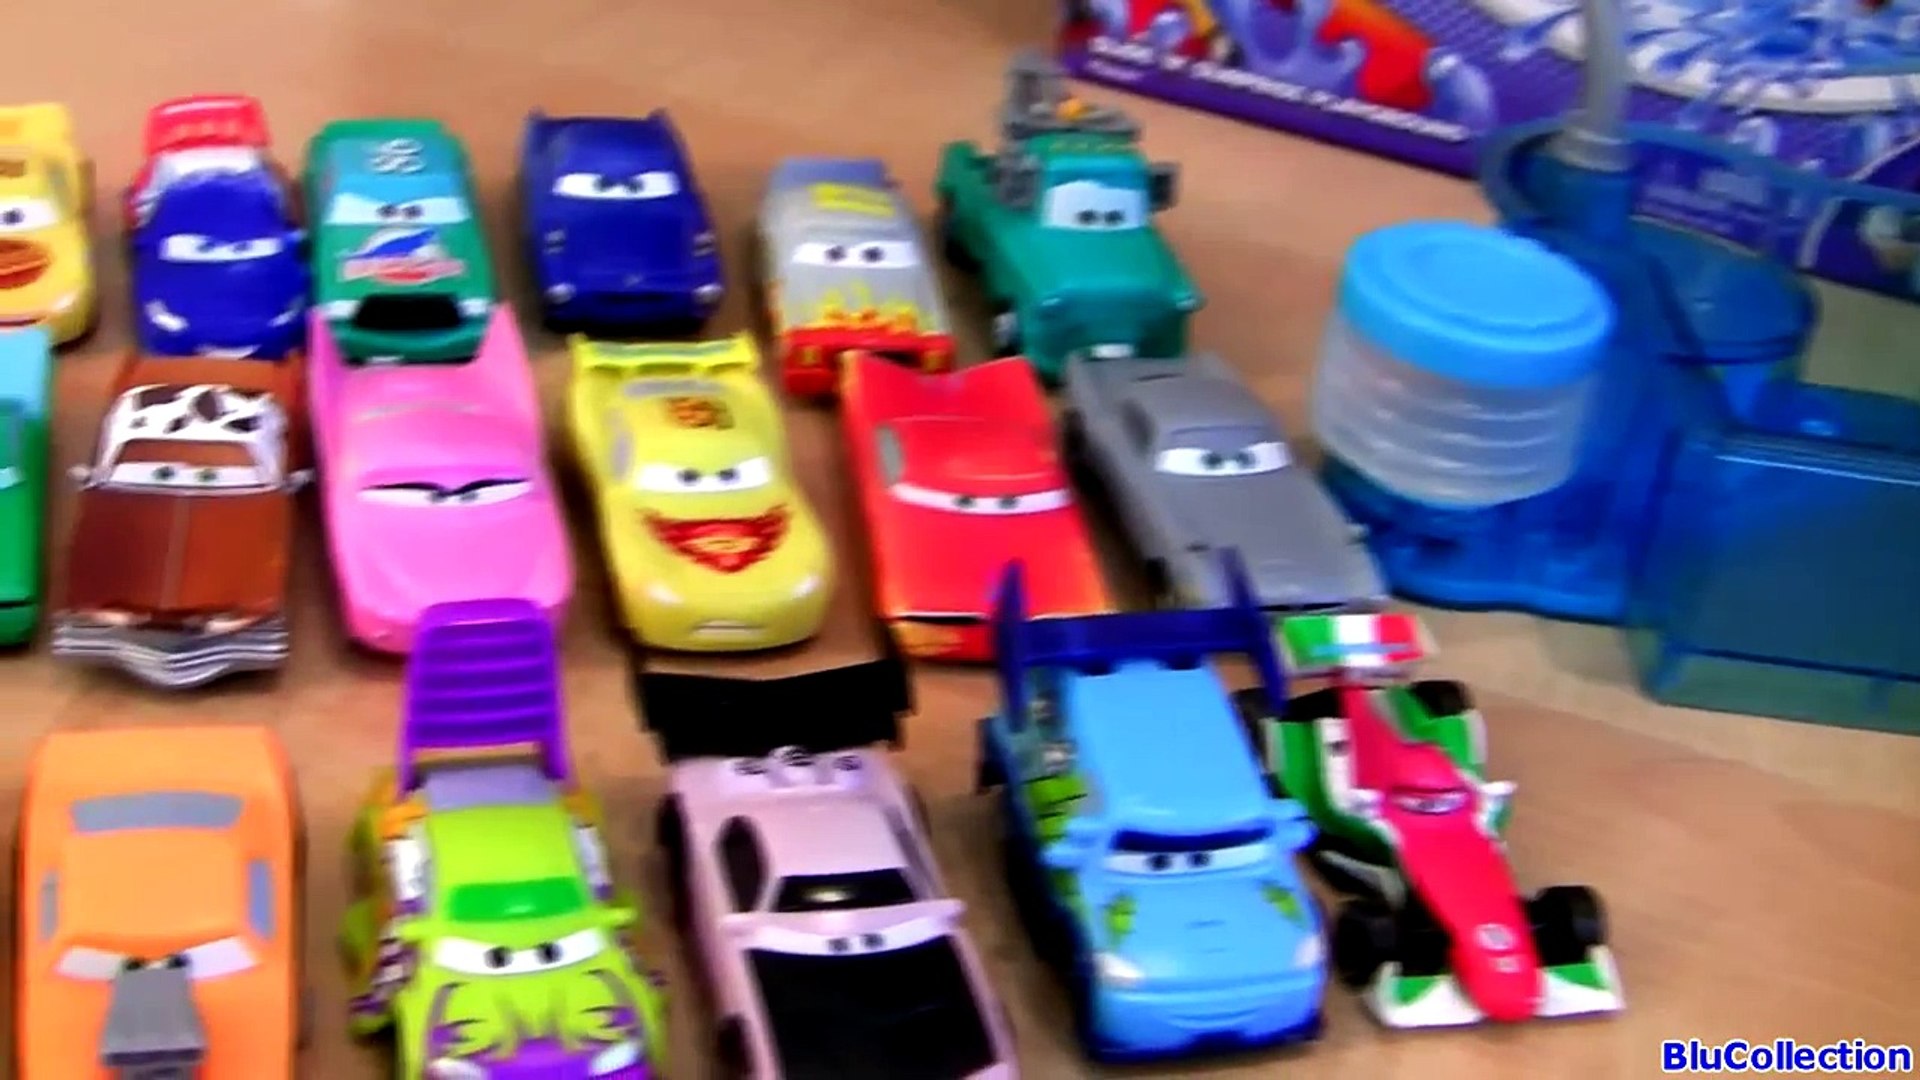 blu toys cars 2